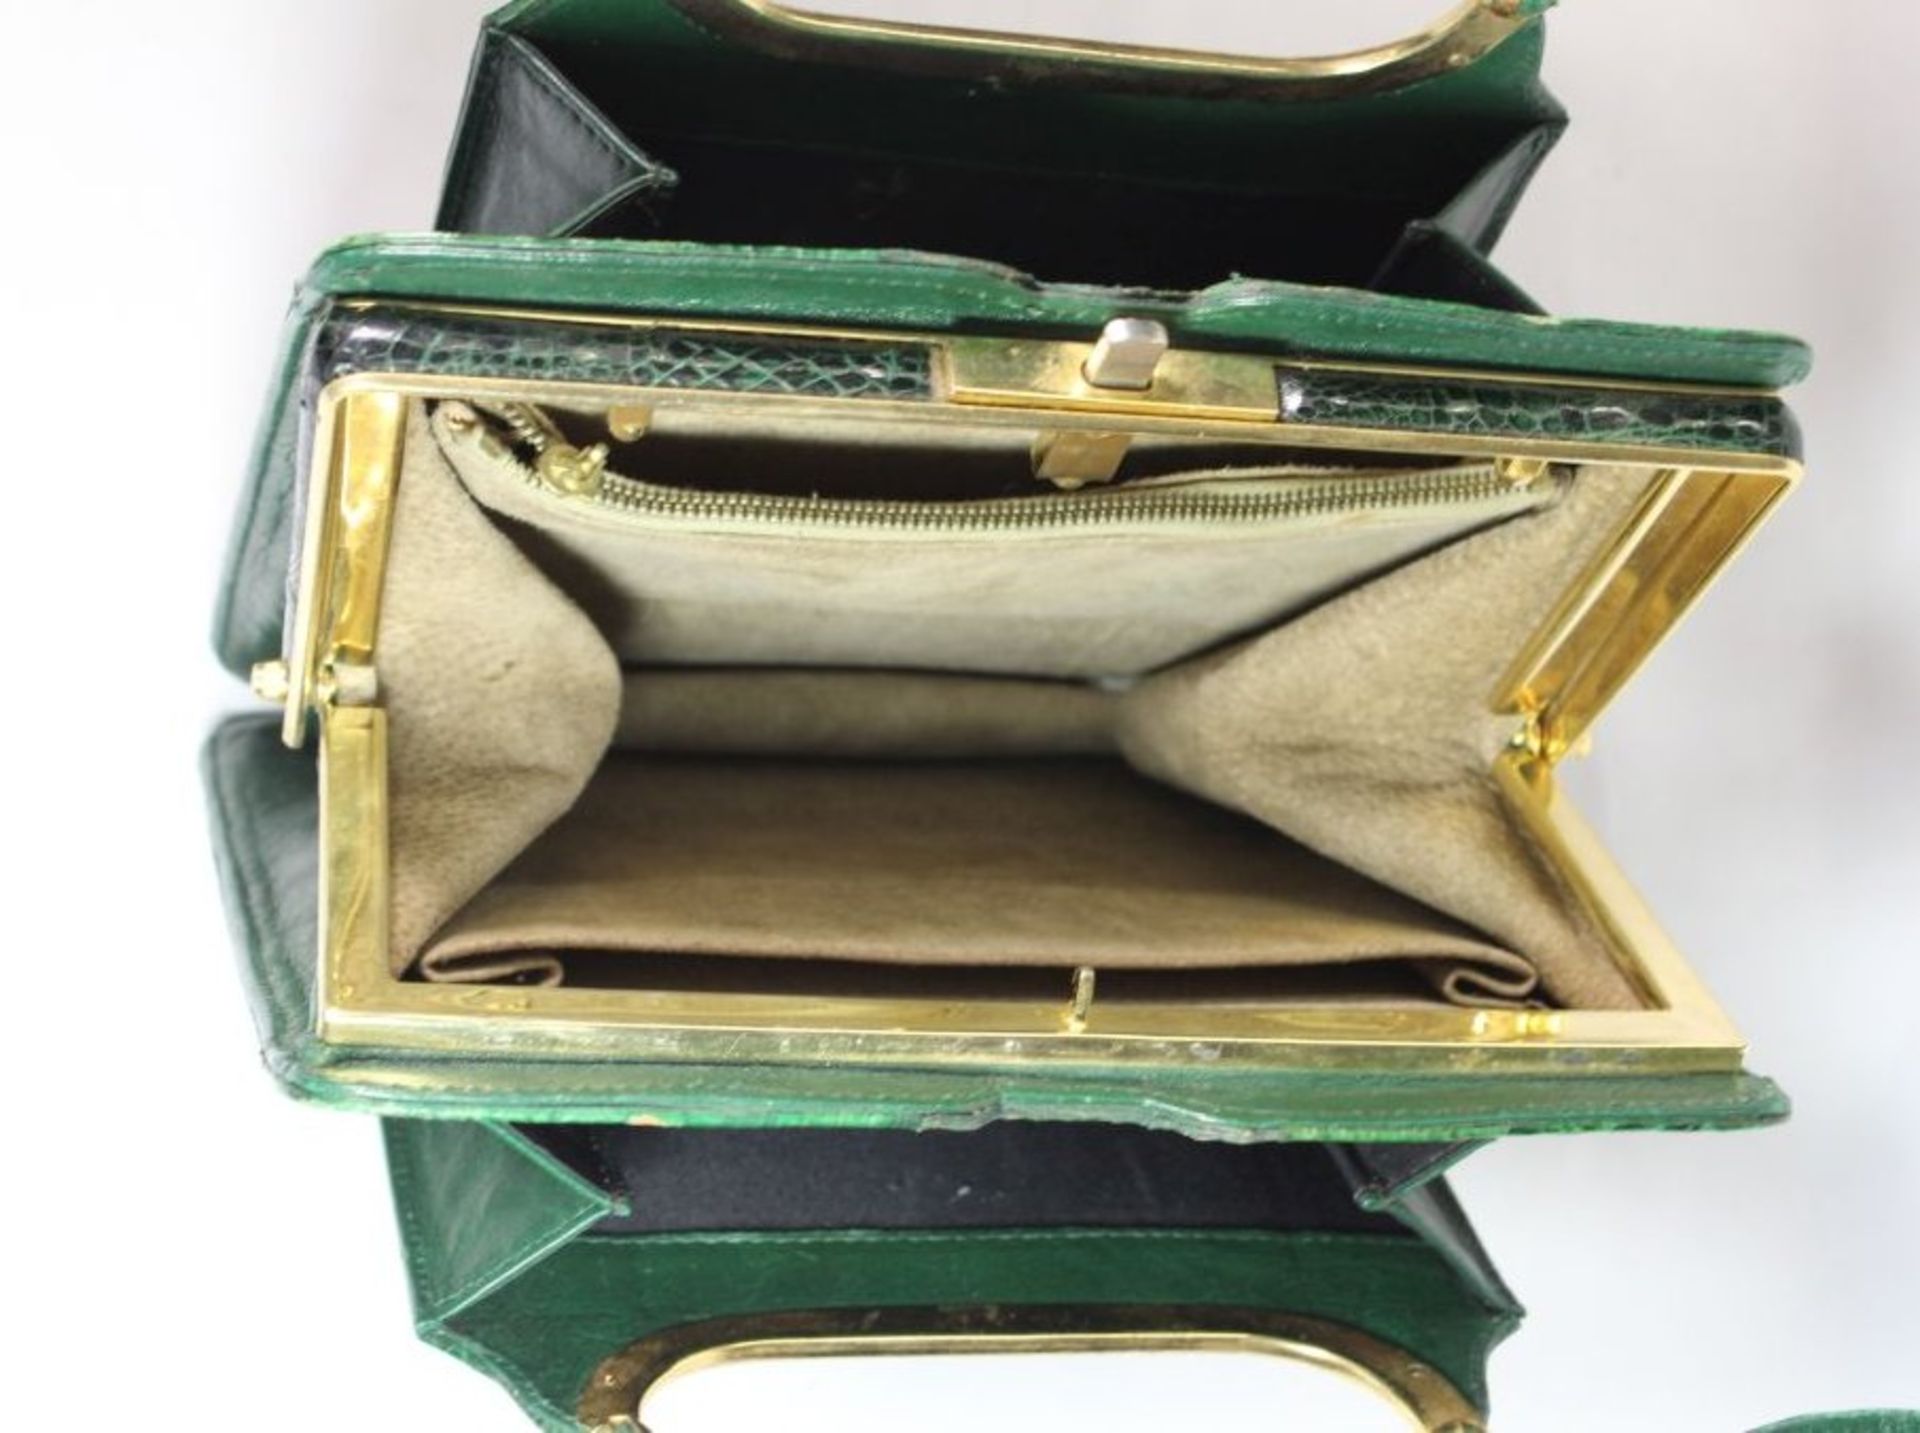 Krokolderhandtasche, grün, älter, Tragespuren, H-25,5 x 23,5cm - Bild 2 aus 2